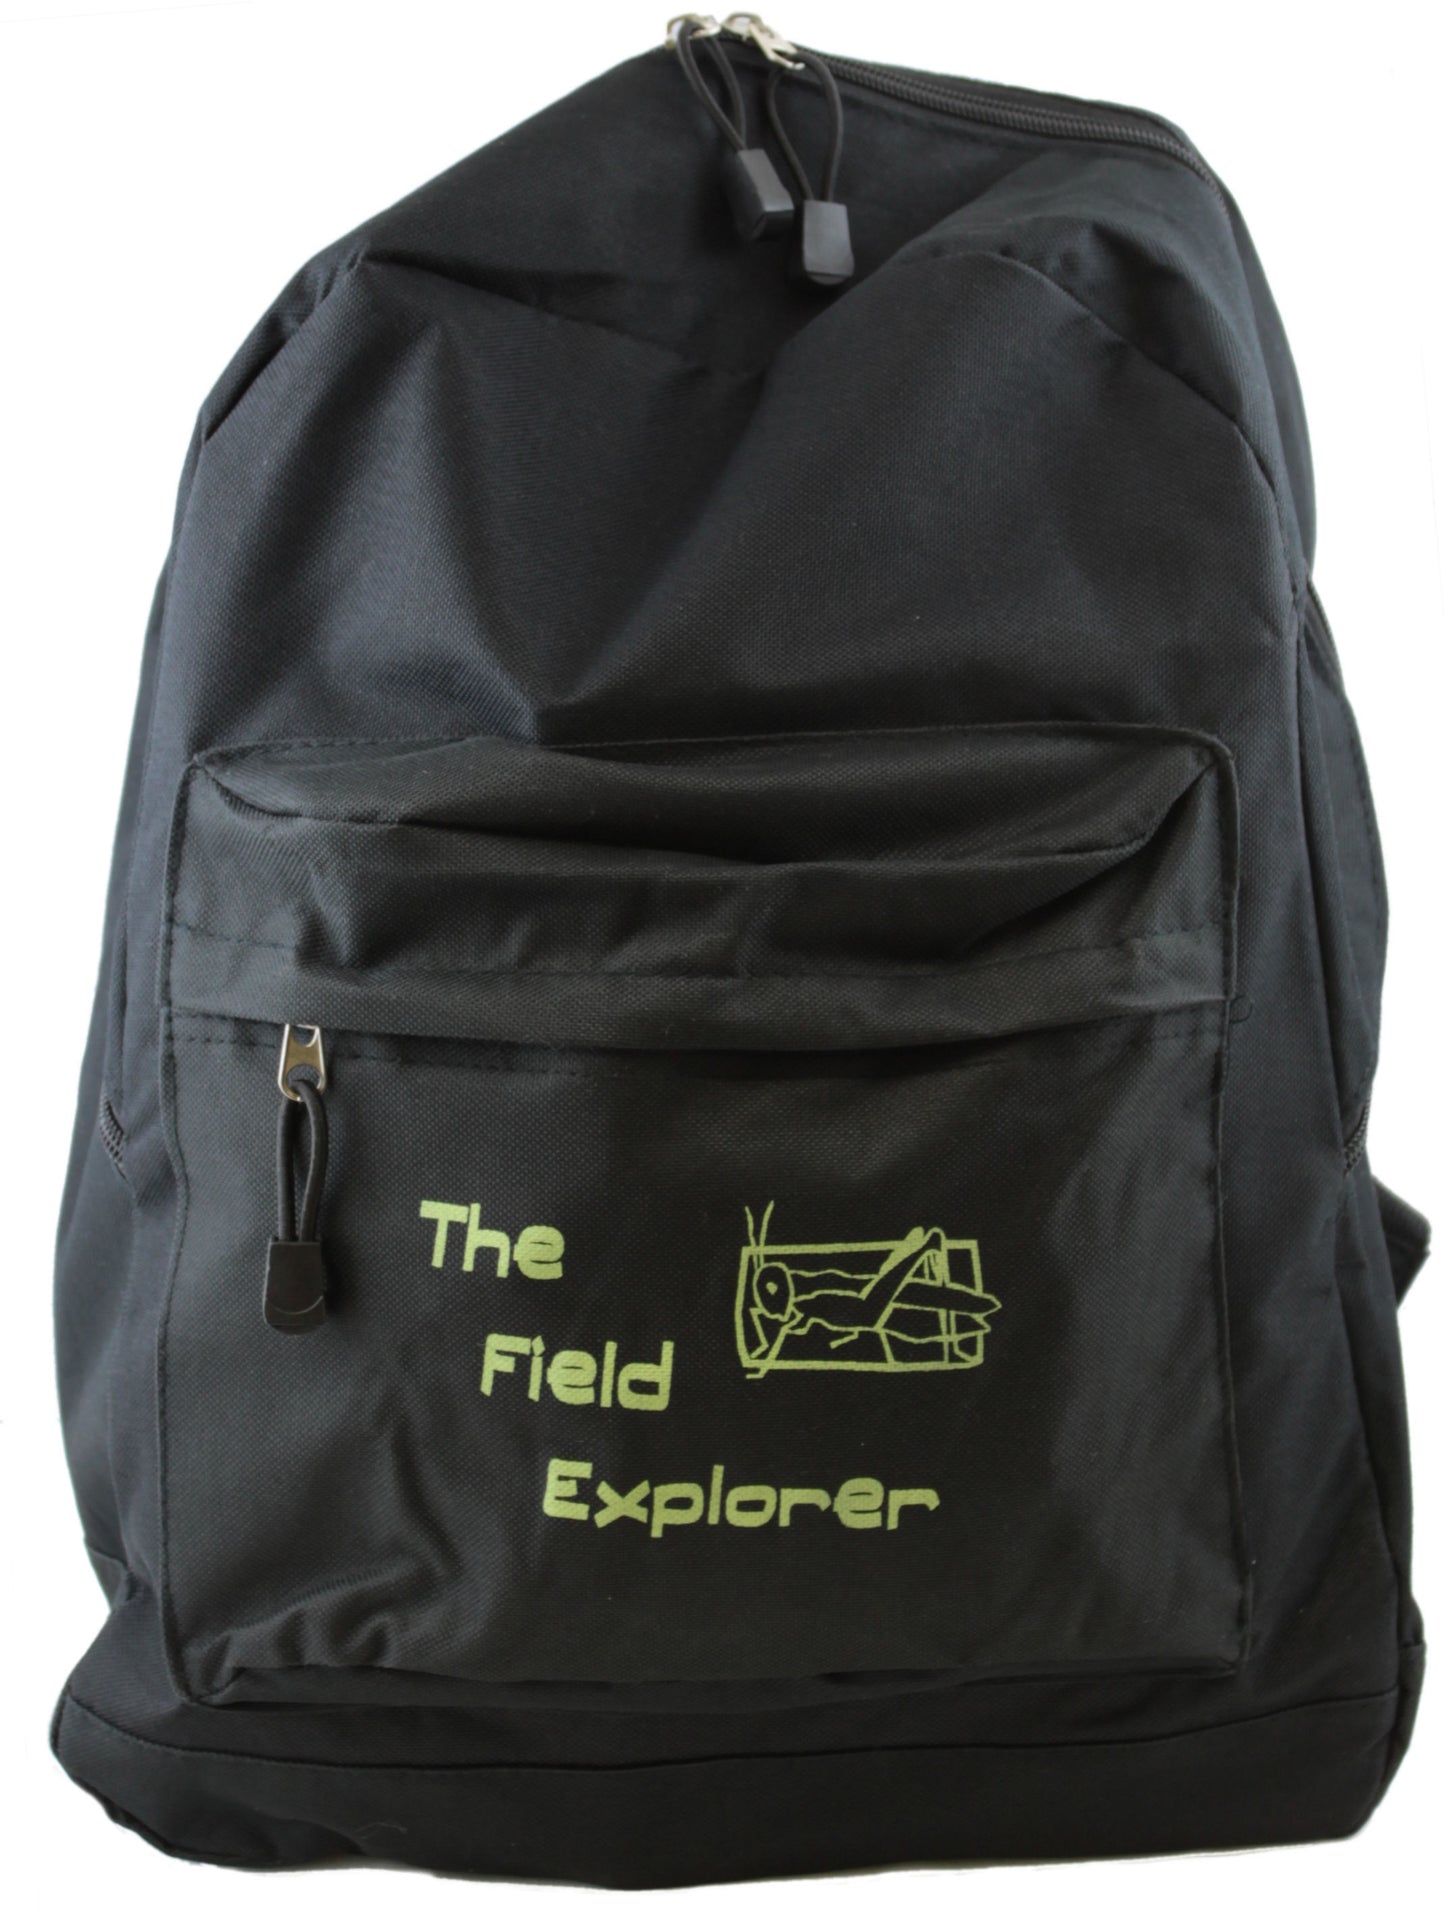 The Field Explorer